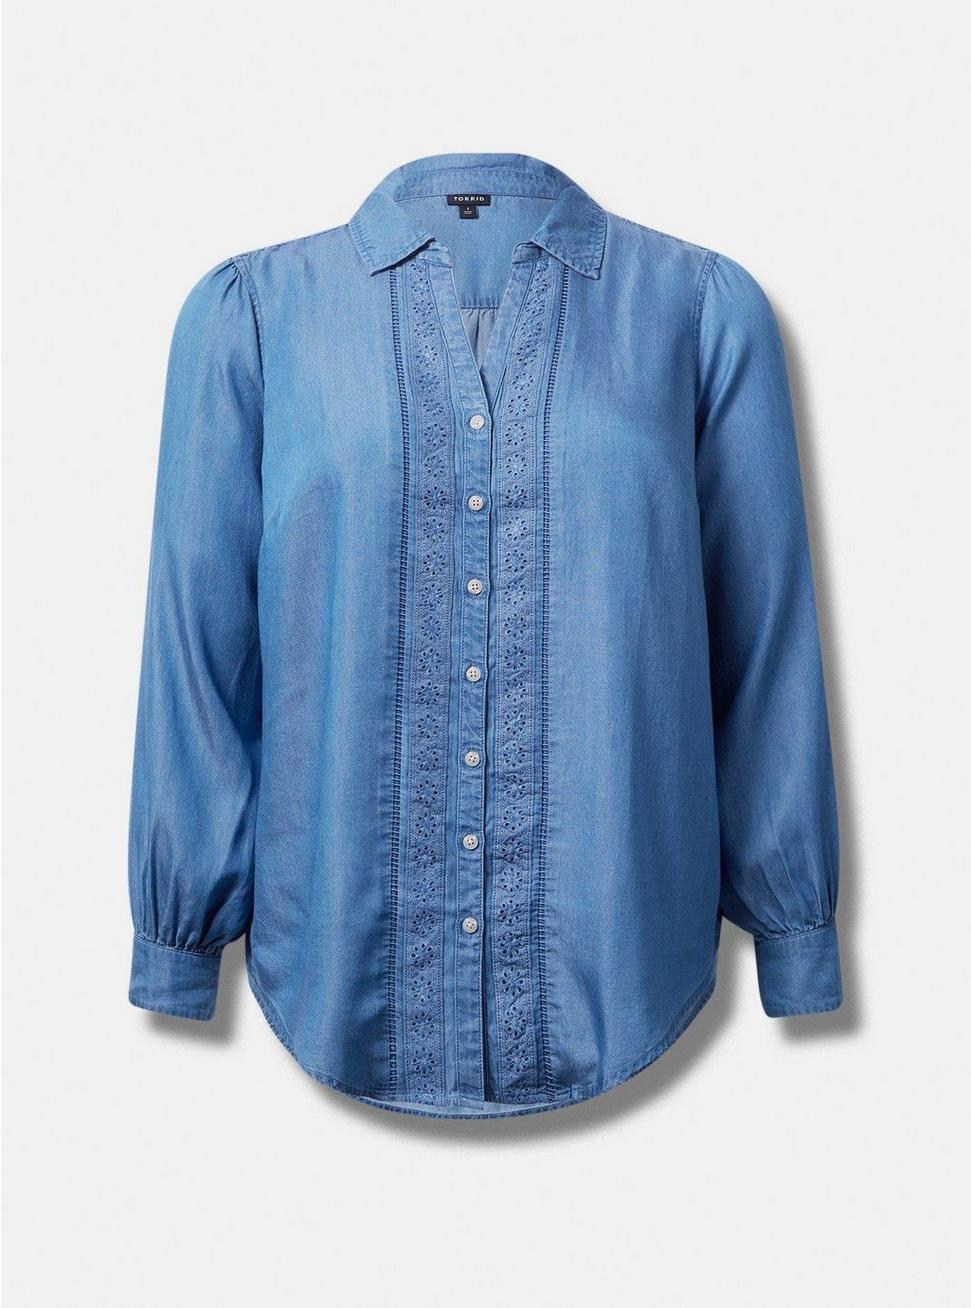 Plus Size Chambray Button Up Shirt, MEDIUM WASH, hi-res